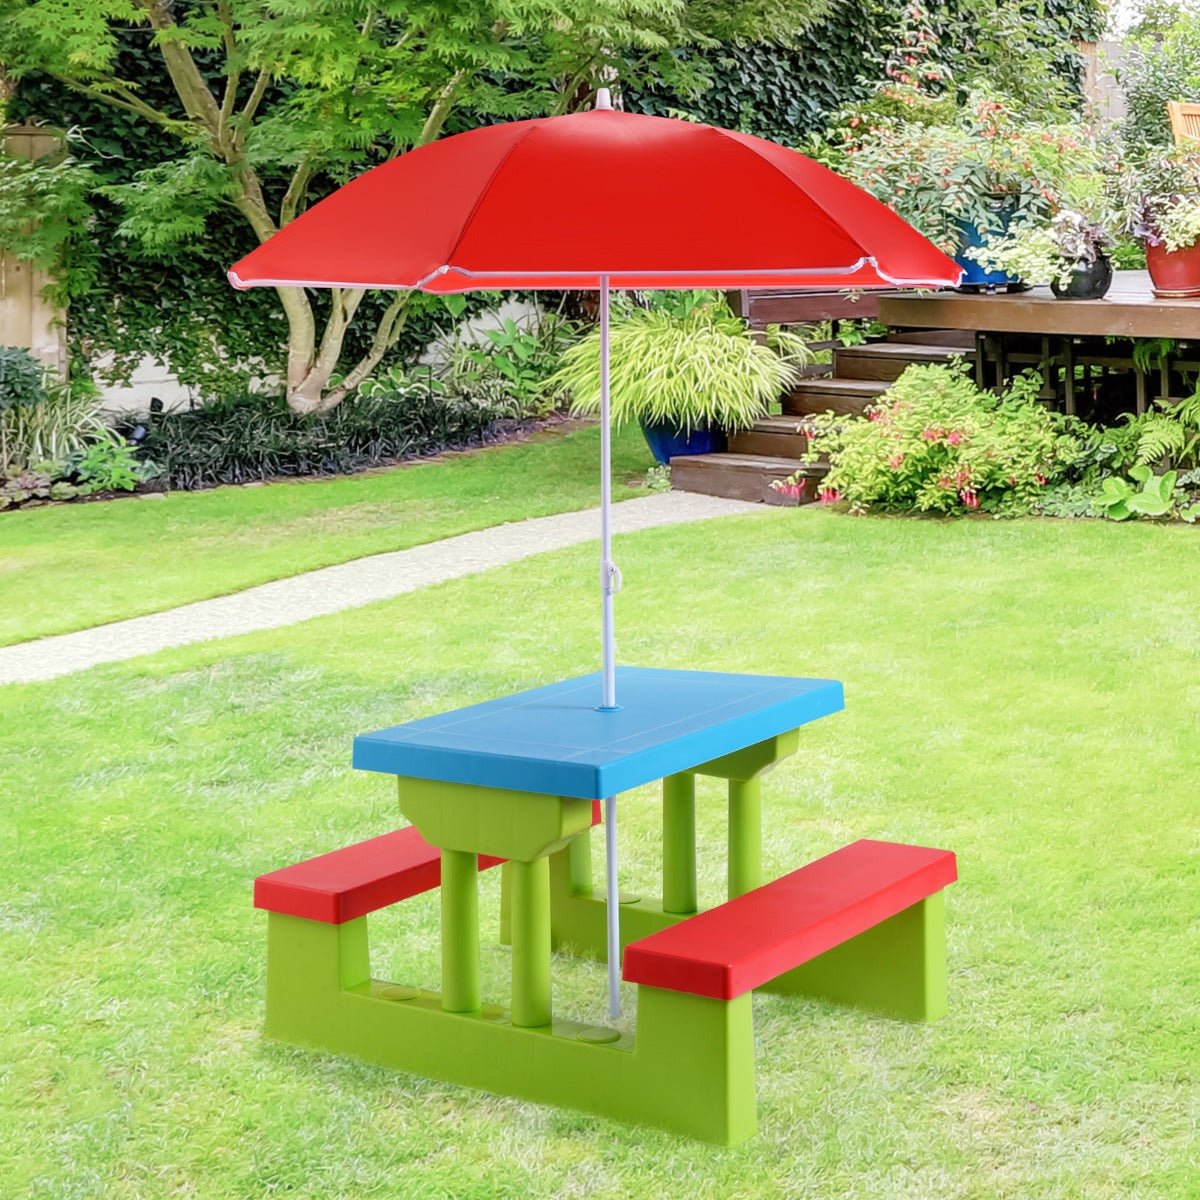 Enjoyable Children's Picnic Spot: Tea Time Fun with Removable Umbrella